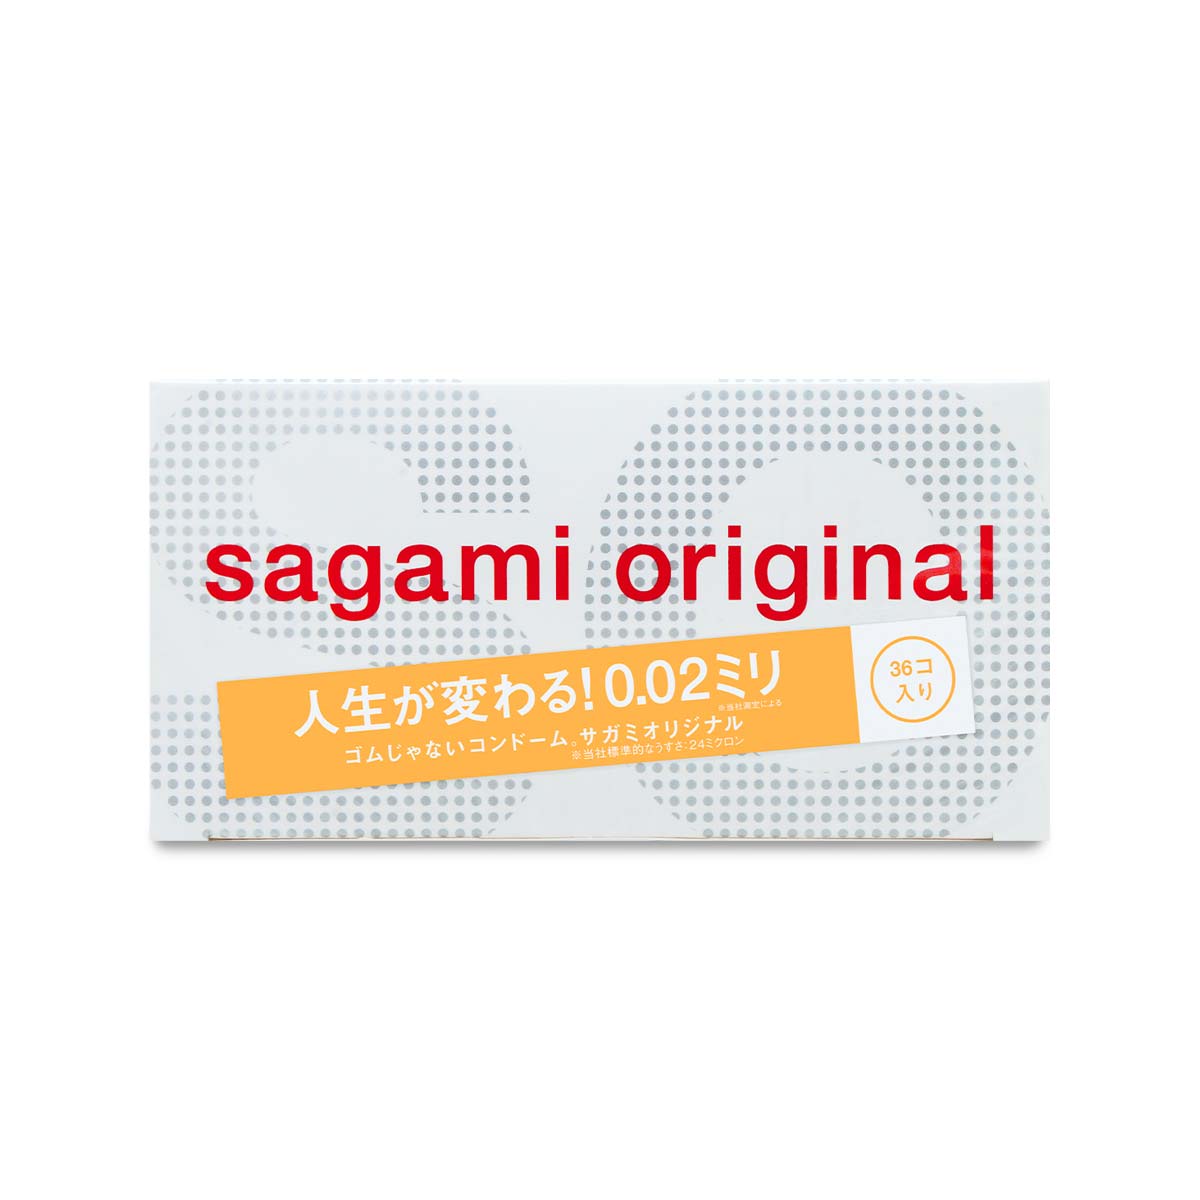 Sagami Original 0.02 36s